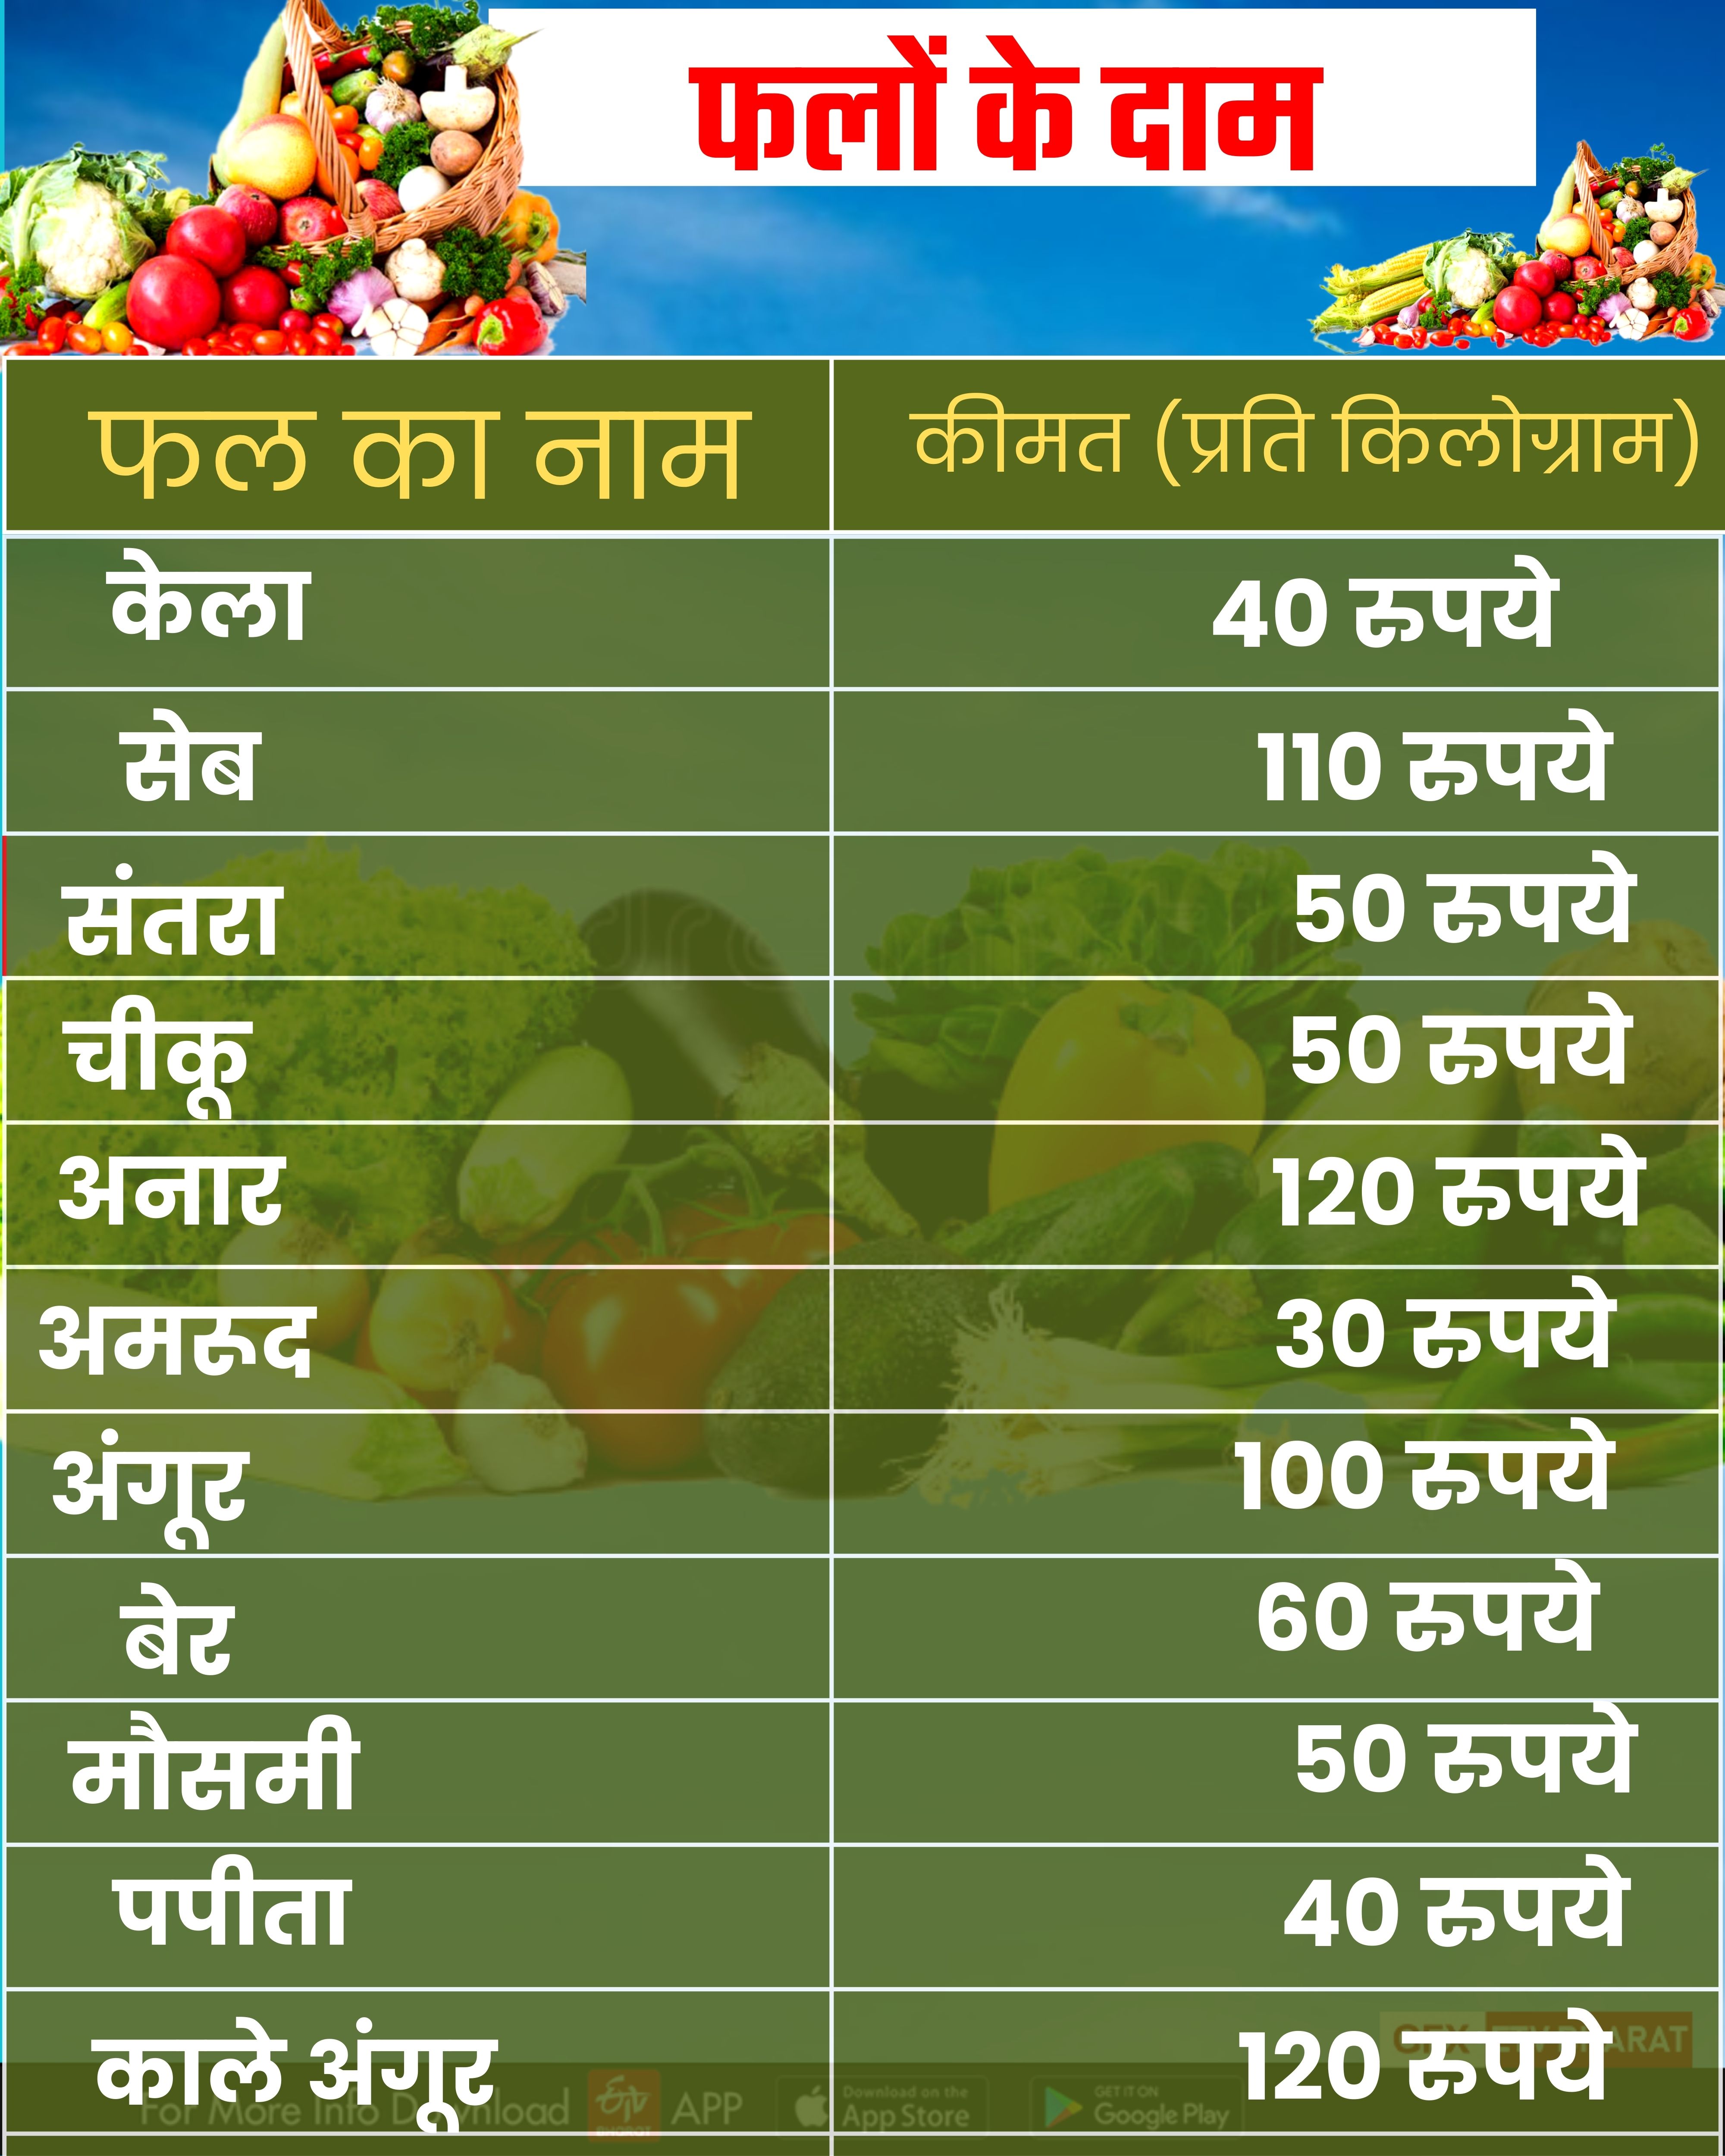 Fruit prices in Haryana